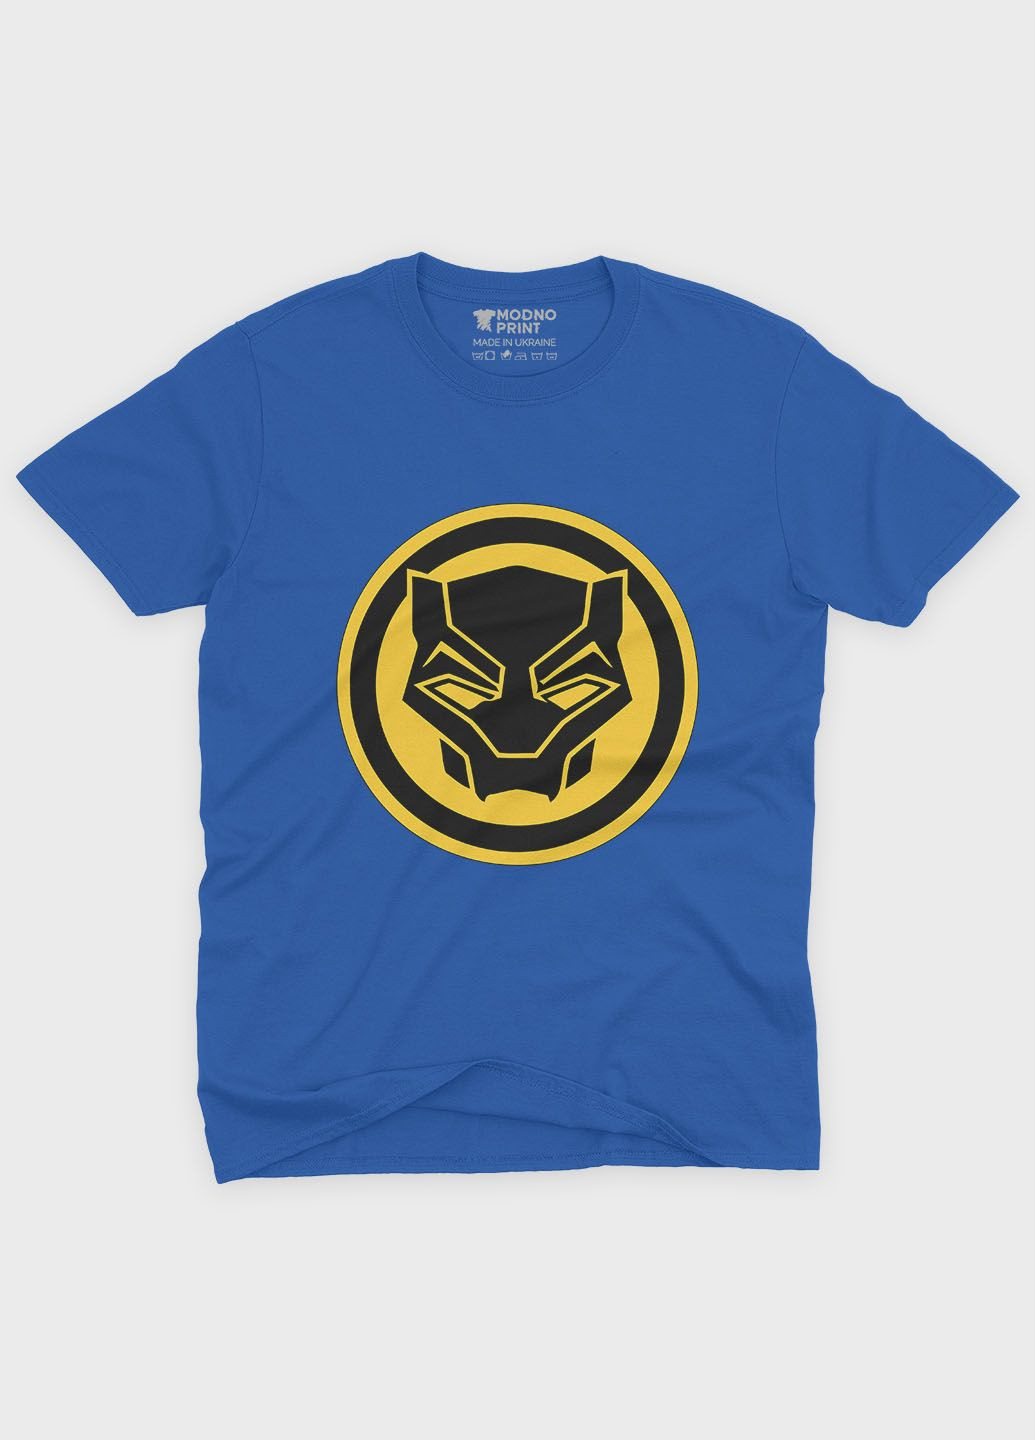 Синя демісезонна футболка для хлопчика з принтом супергероя - чорна пантера (ts001-1-brr-006-027-004-b) Modno